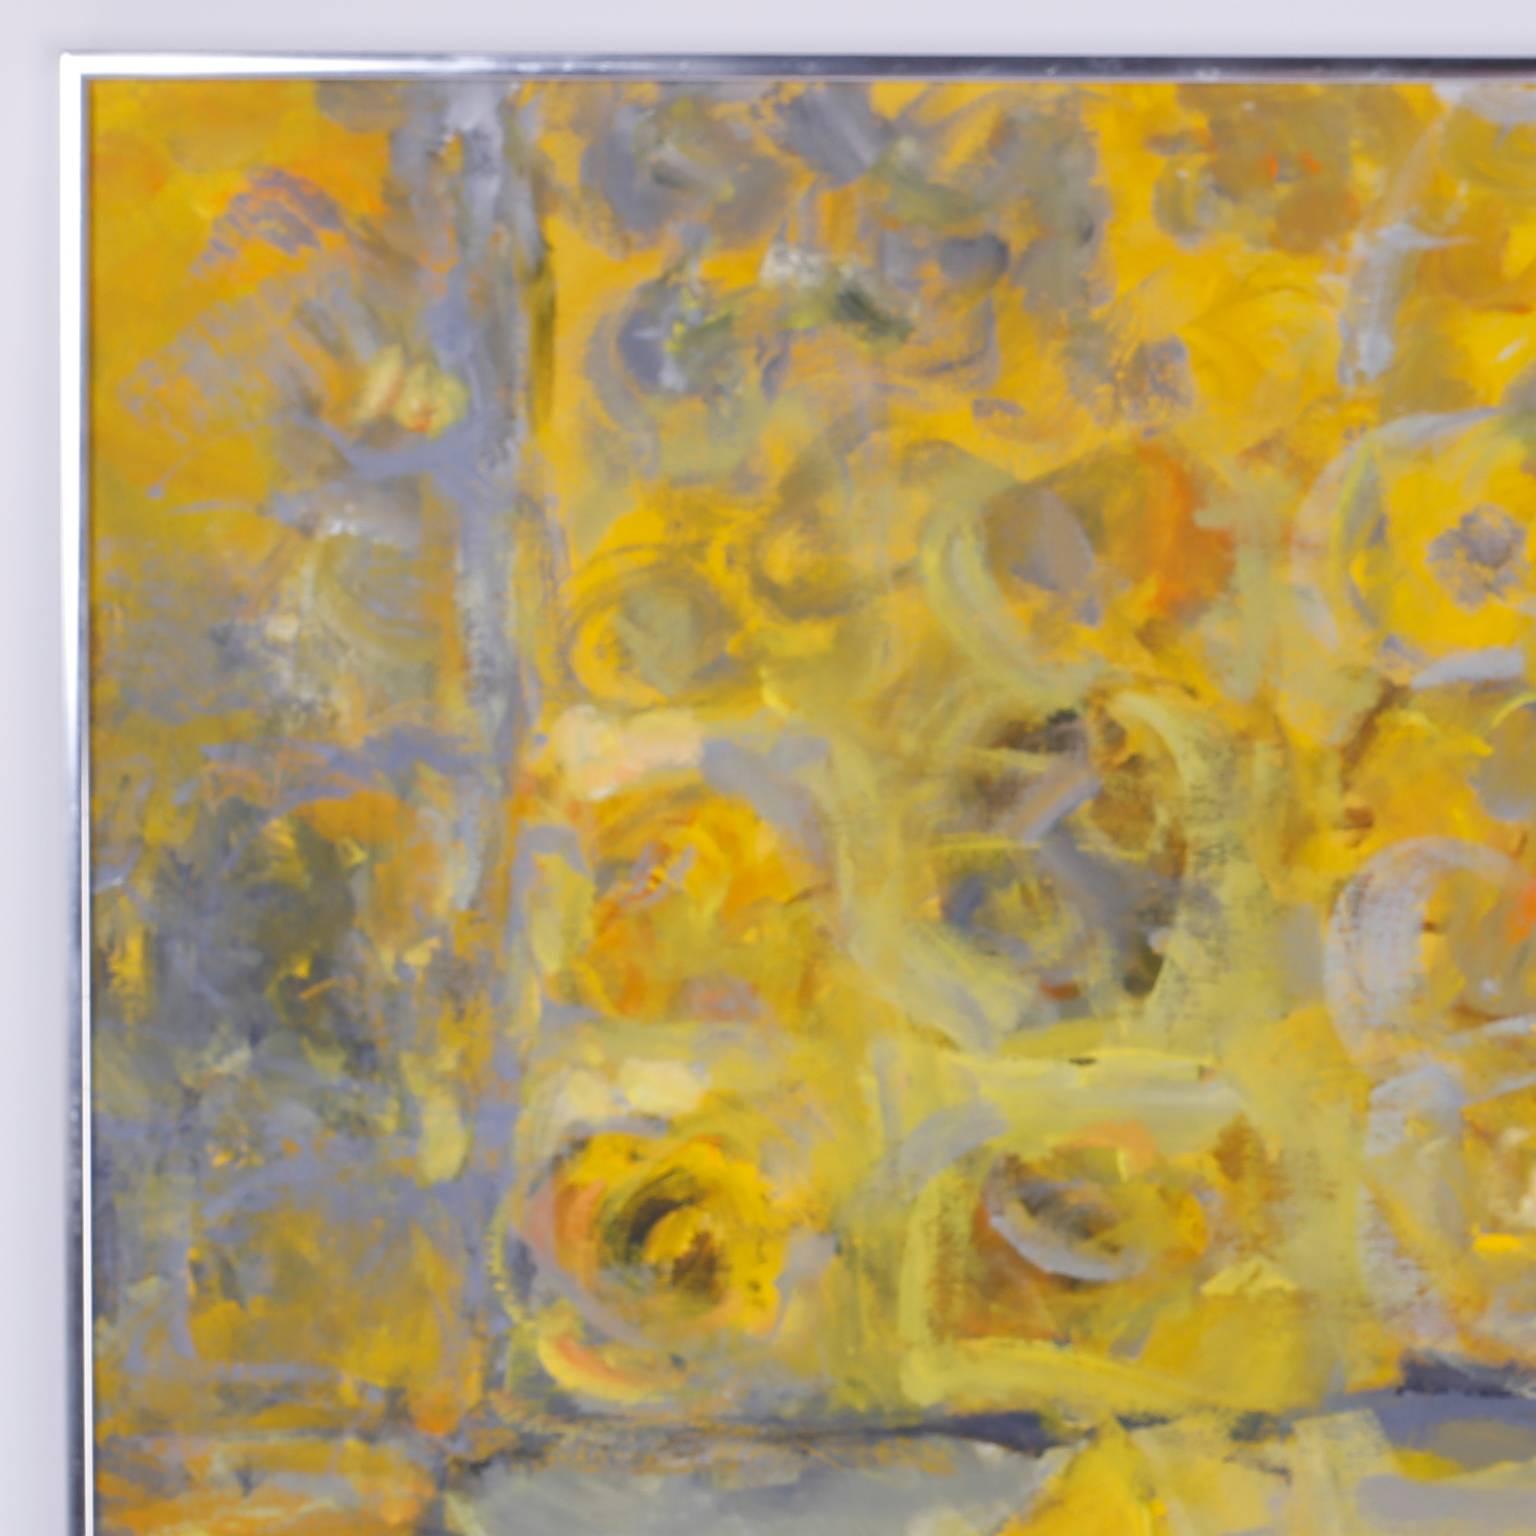 Evocadora pintura abstracta acrílica sobre lienzo que explora la relación entre el amarillo y el gris. Pintado con acrílico sobre lienzo en 1973 por Bonnie Lewton, titulado al dorso Naturaleza muerta amarilla. Nota interesante: este cuadro participó